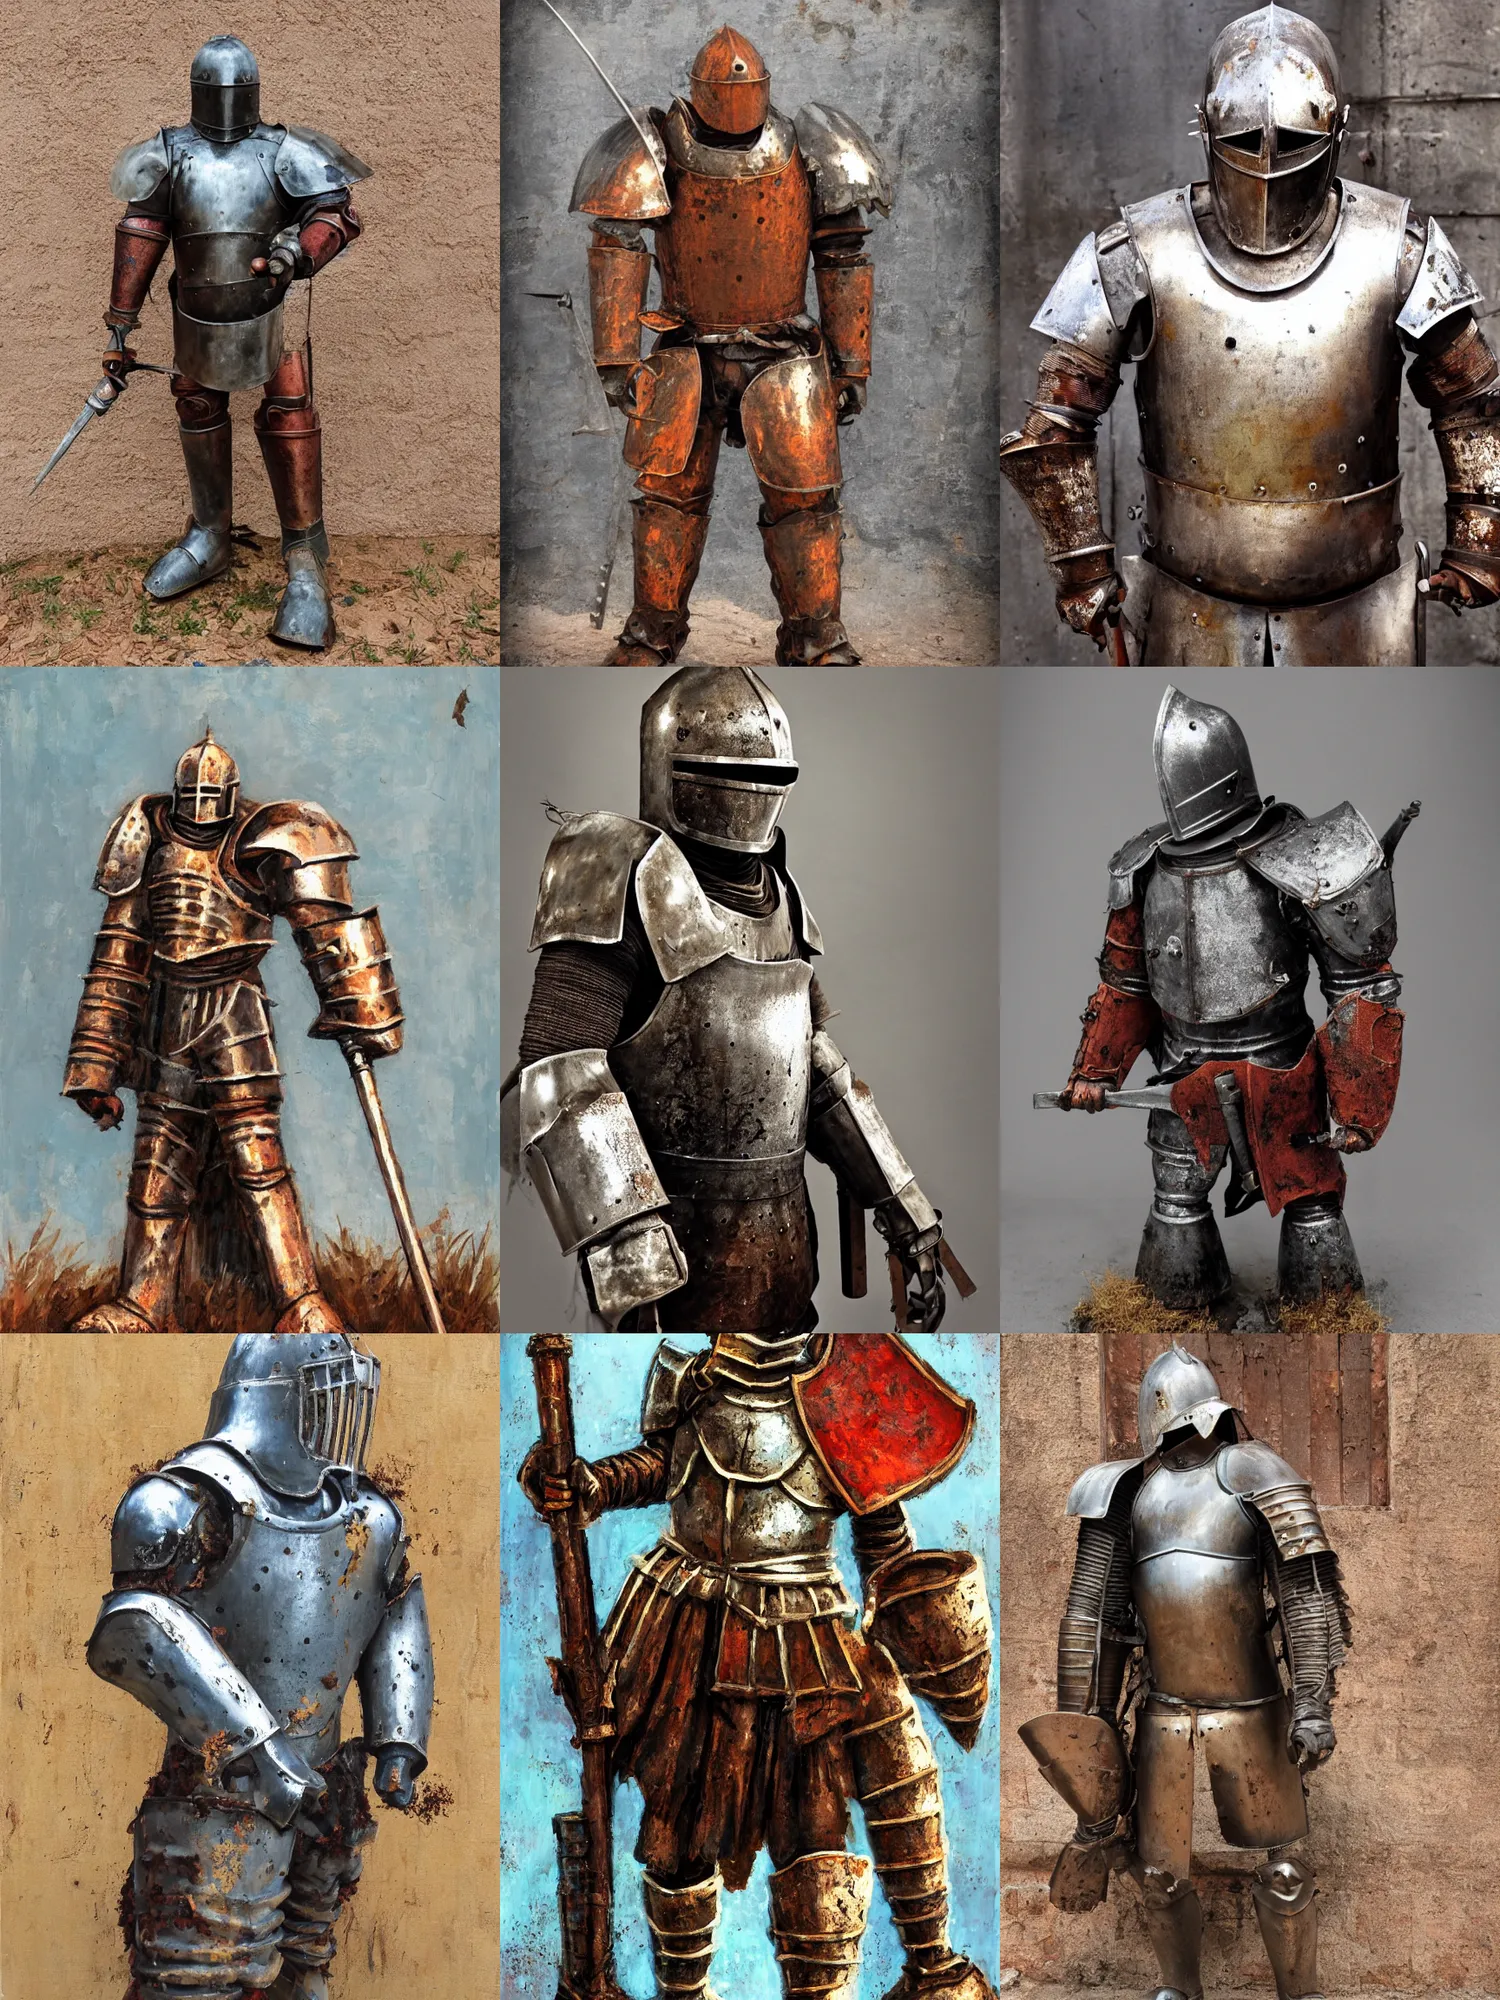 Prompt: knight in rusty armor